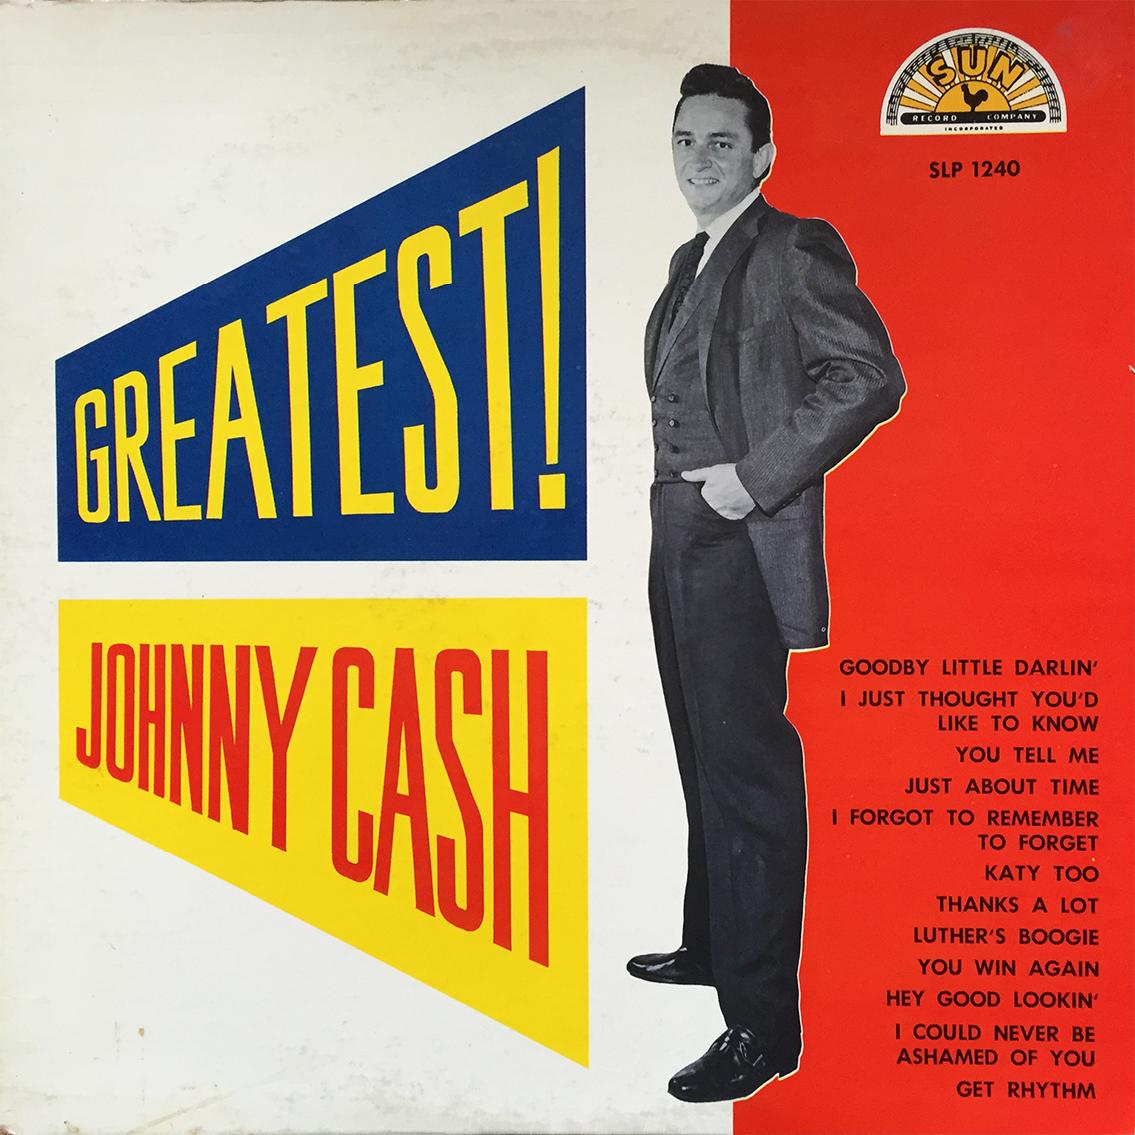 Johnny Cash - Greatest! (1959)